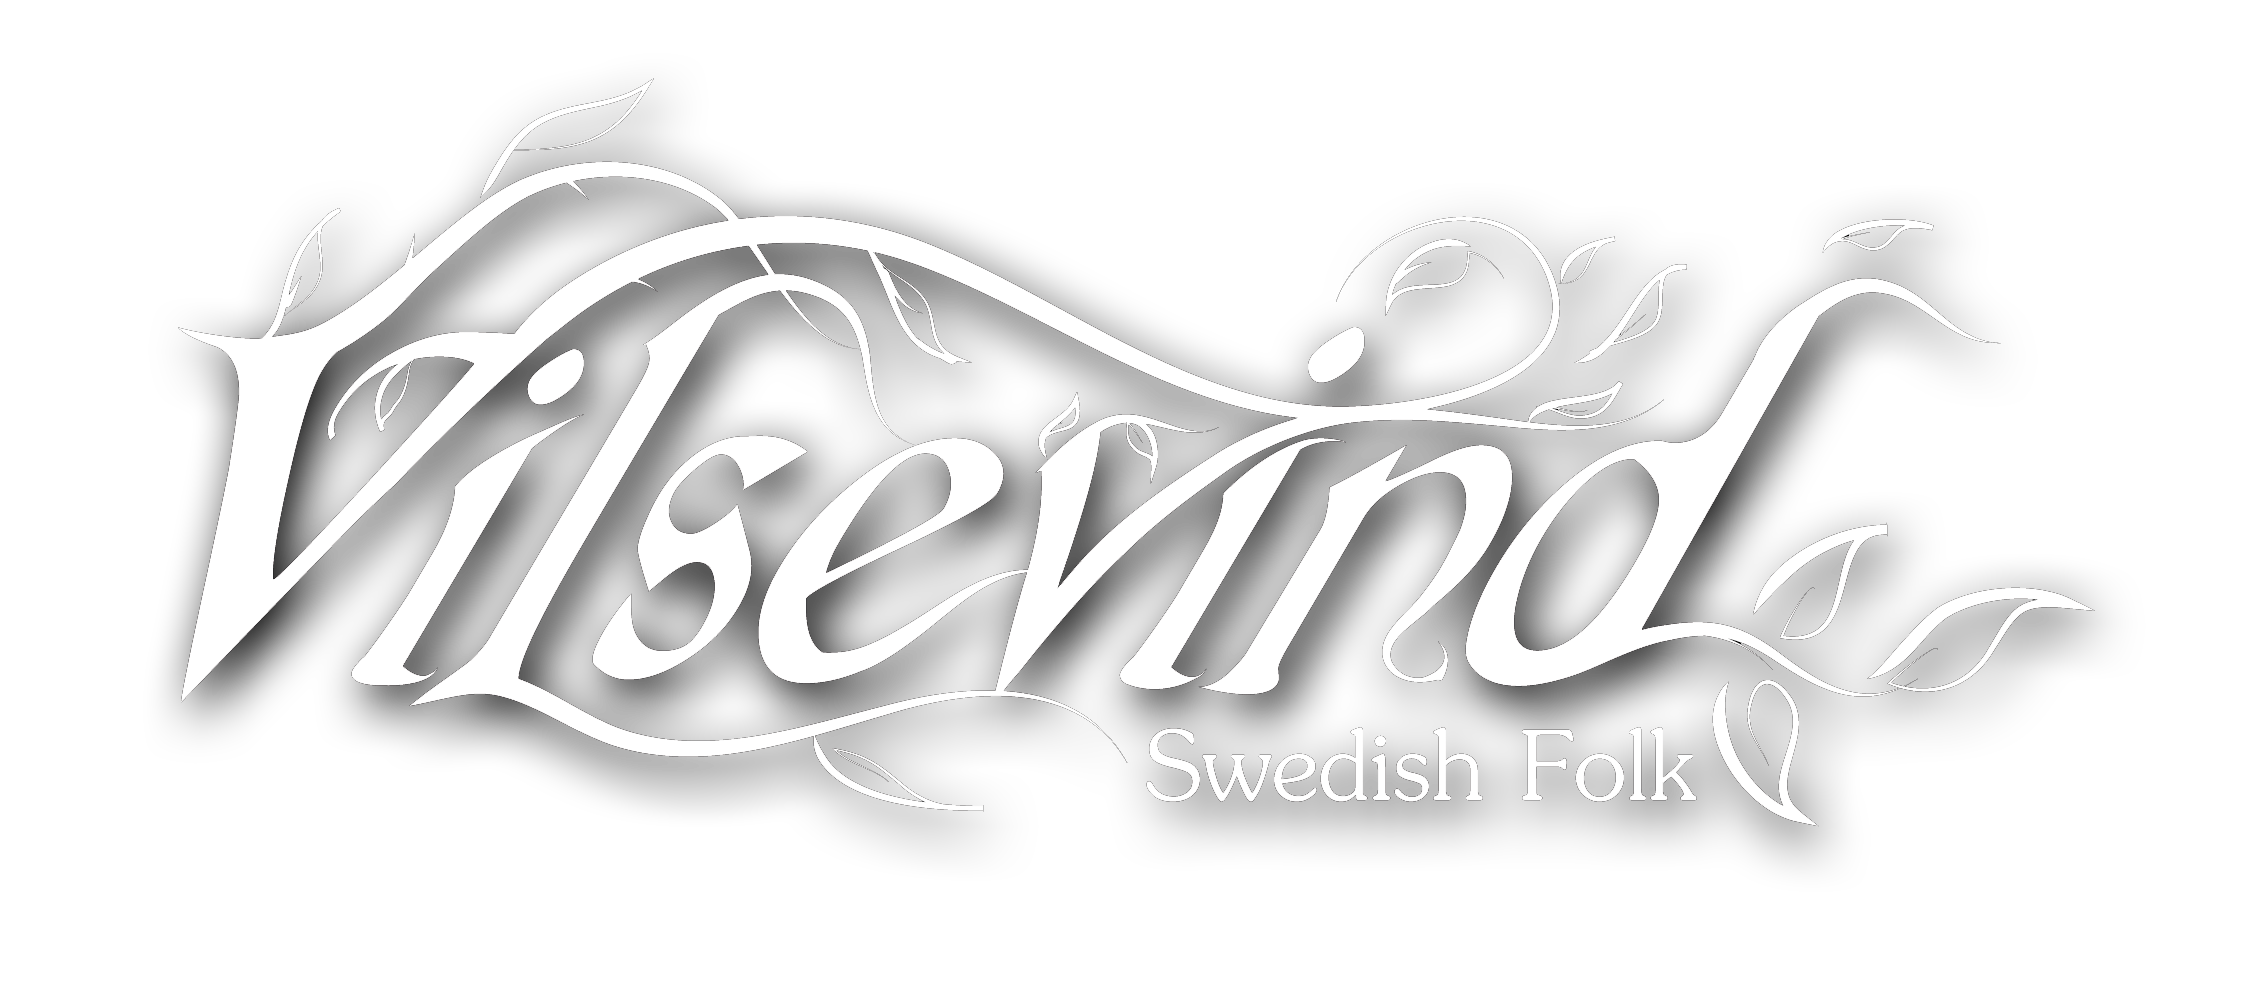 VILSEVIND - Modern Swedish Folk Music